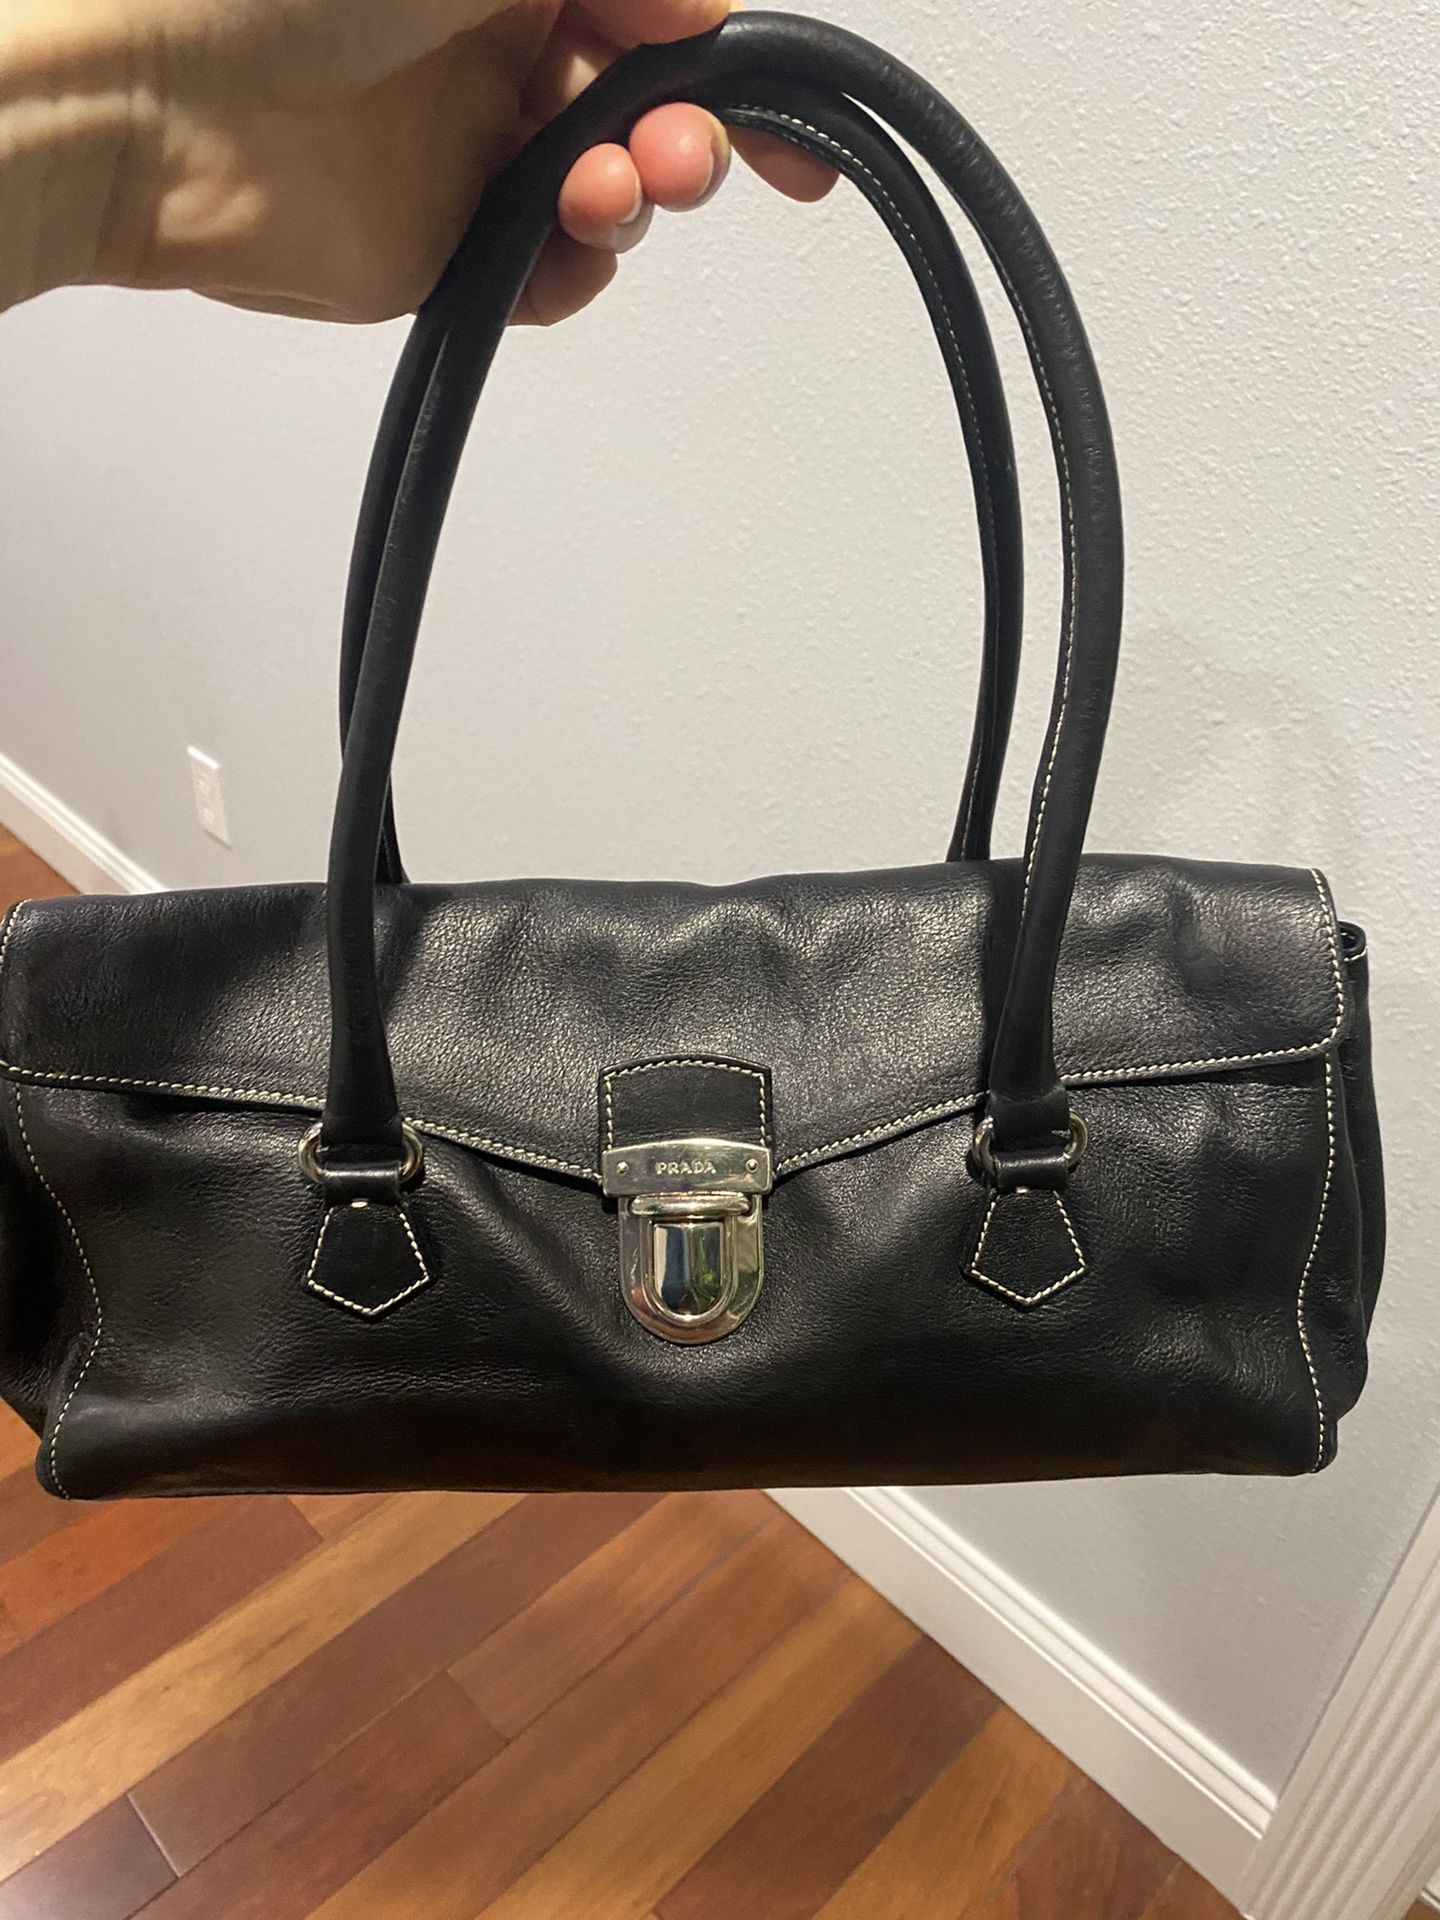 PRADA Soft Pebbled Leather Bag